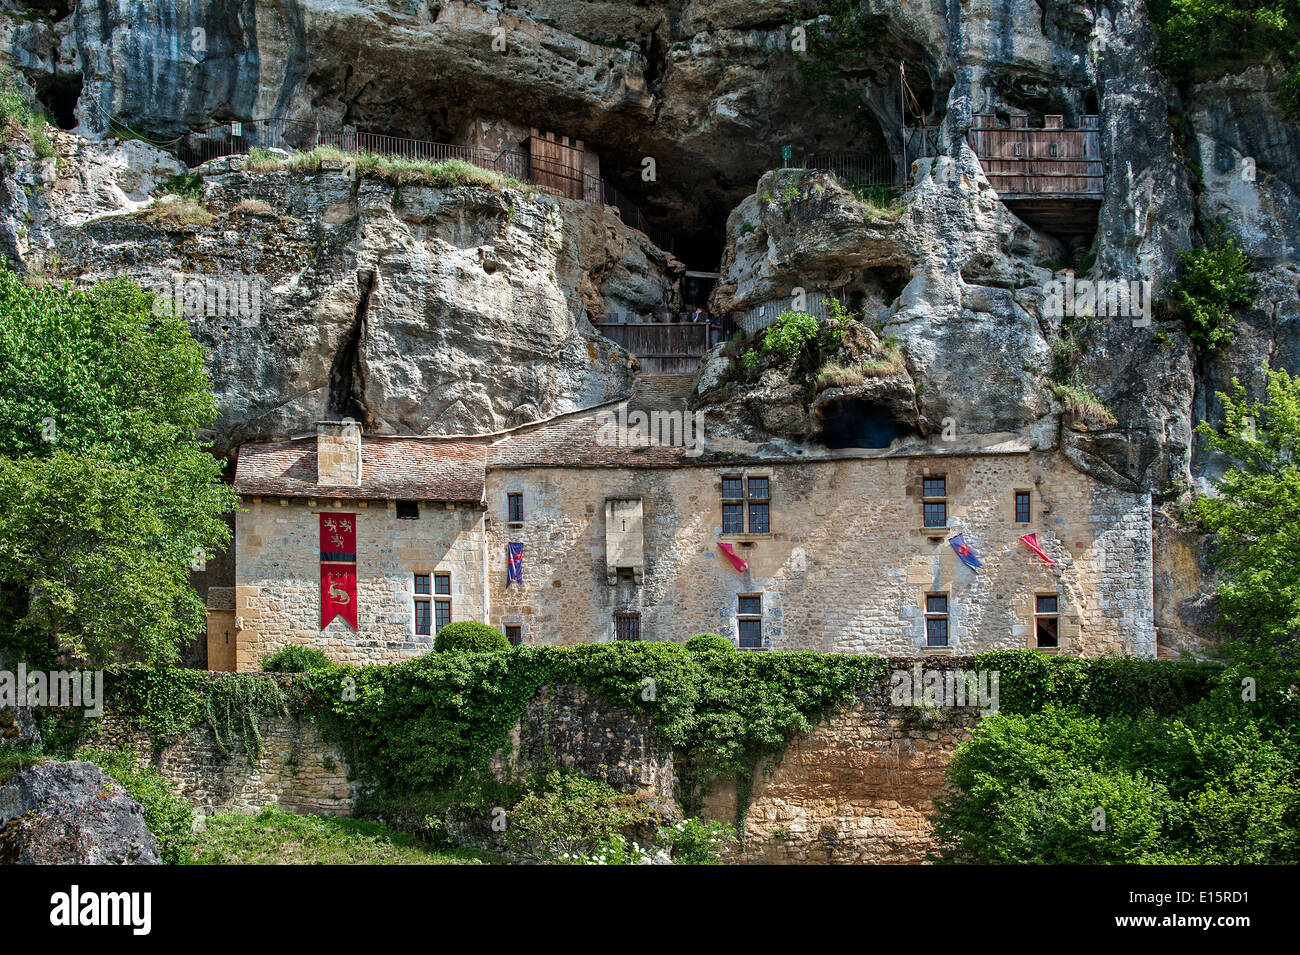 Maison Forte de Reignac, befestigten Herrenhaus erbaute Felswand, Tursac, Dordogne, Aquitaine, Frankreich Stockfoto